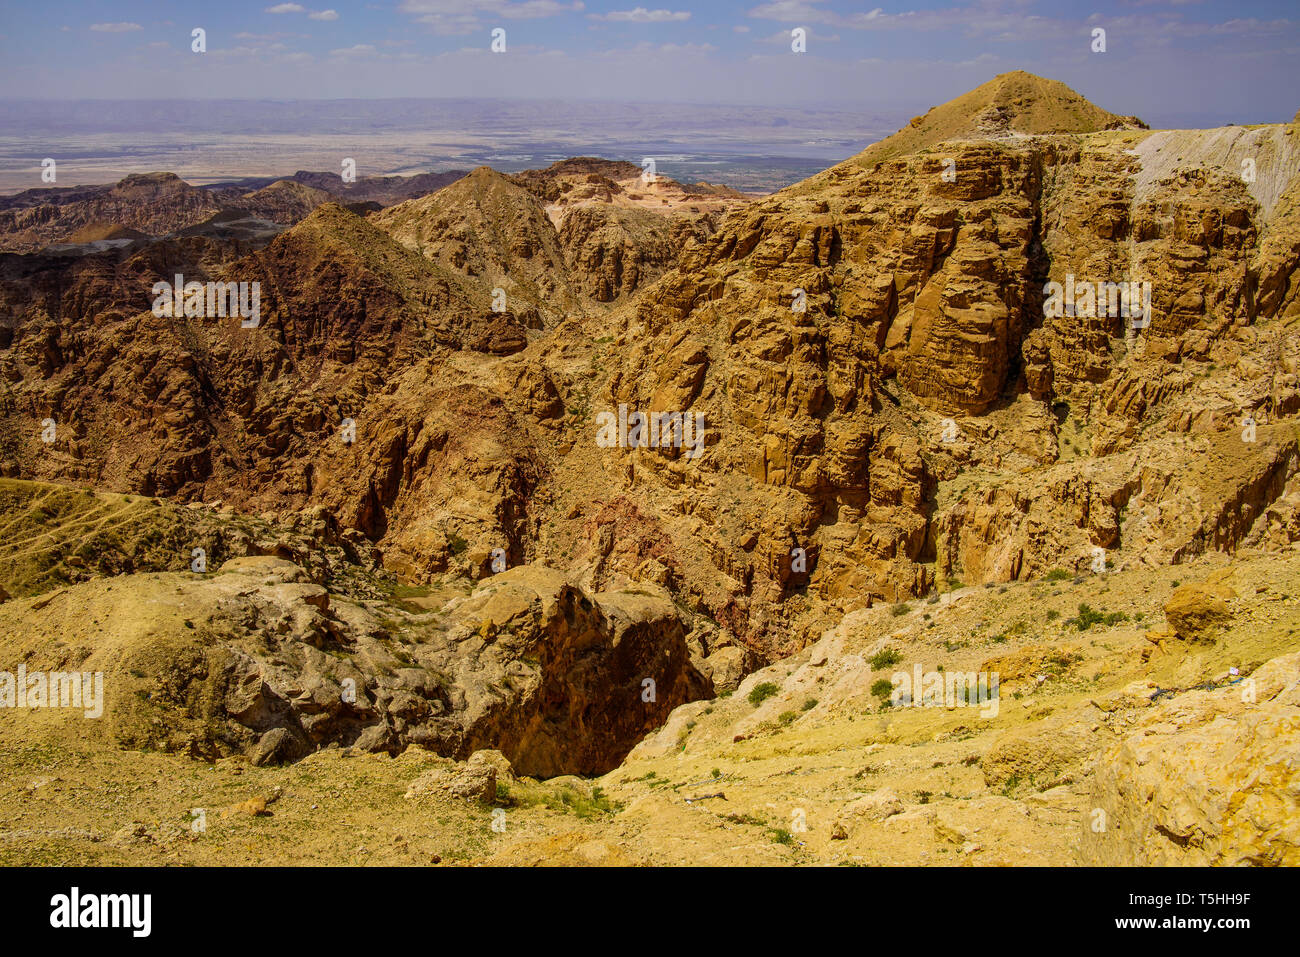 View of Abarim mountain range from Tafilah Highway, Dead Sea depression in the background. Jordan. Stock Photo